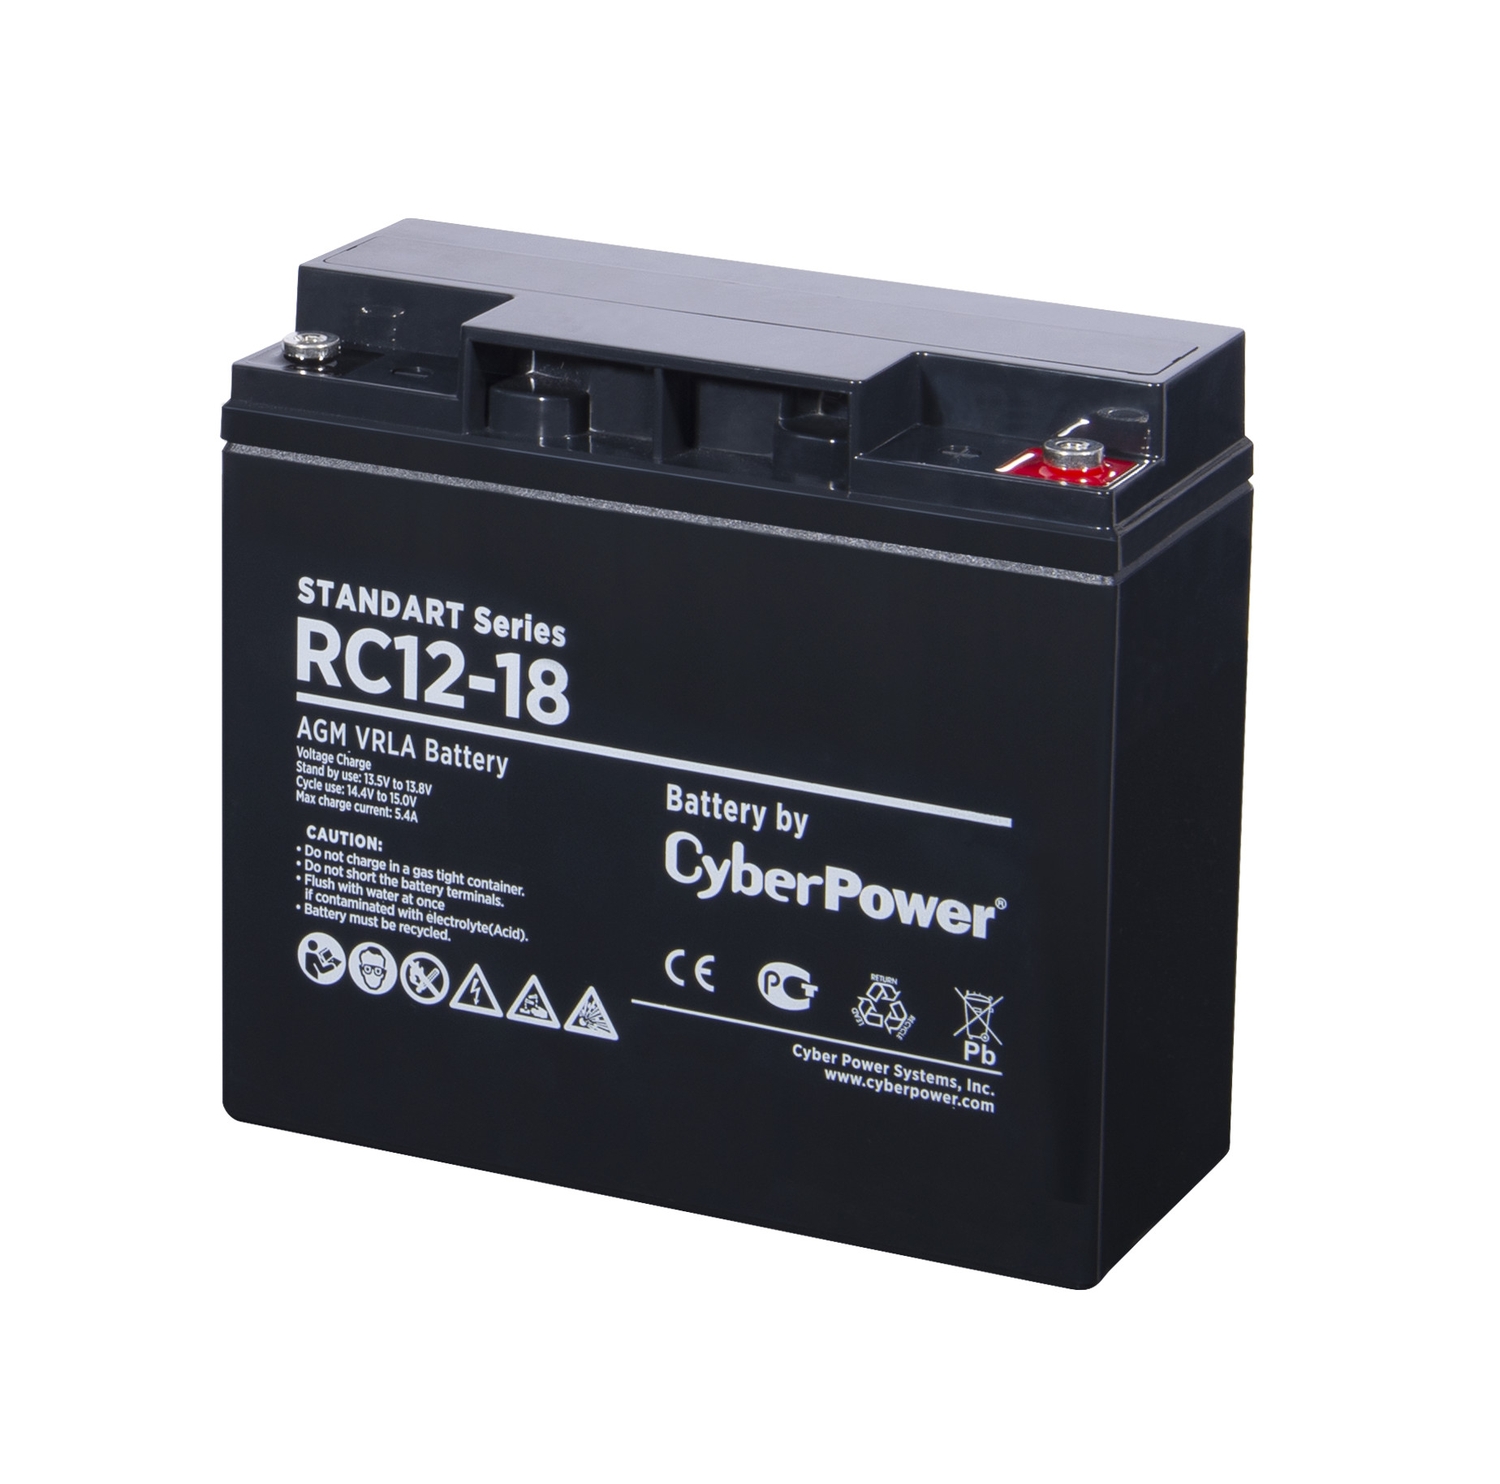 Батарея для ИБП CyberPower Standart series RC 12-18 cyberpower аккумуляторная батарея ss rс 6 12 6 в 12 ач